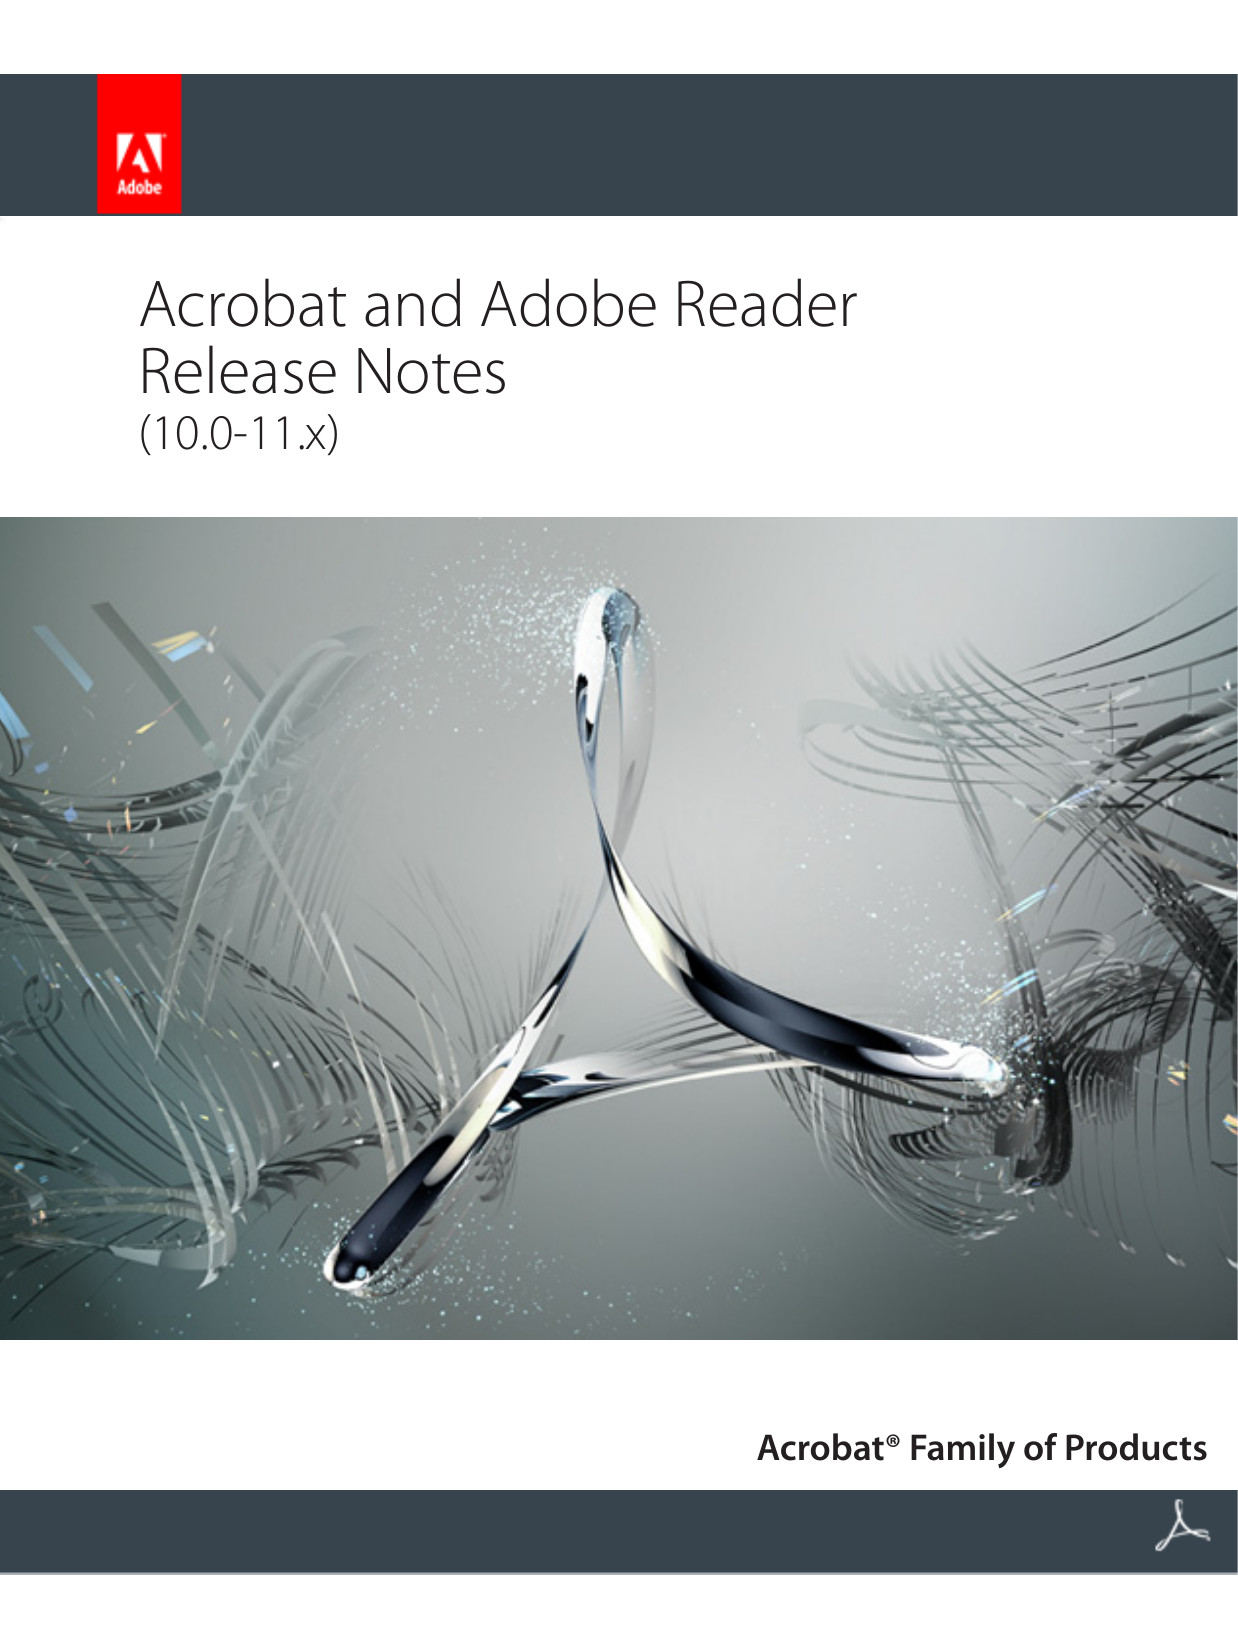 adobe reader crashes mac os x 10.6 8 download